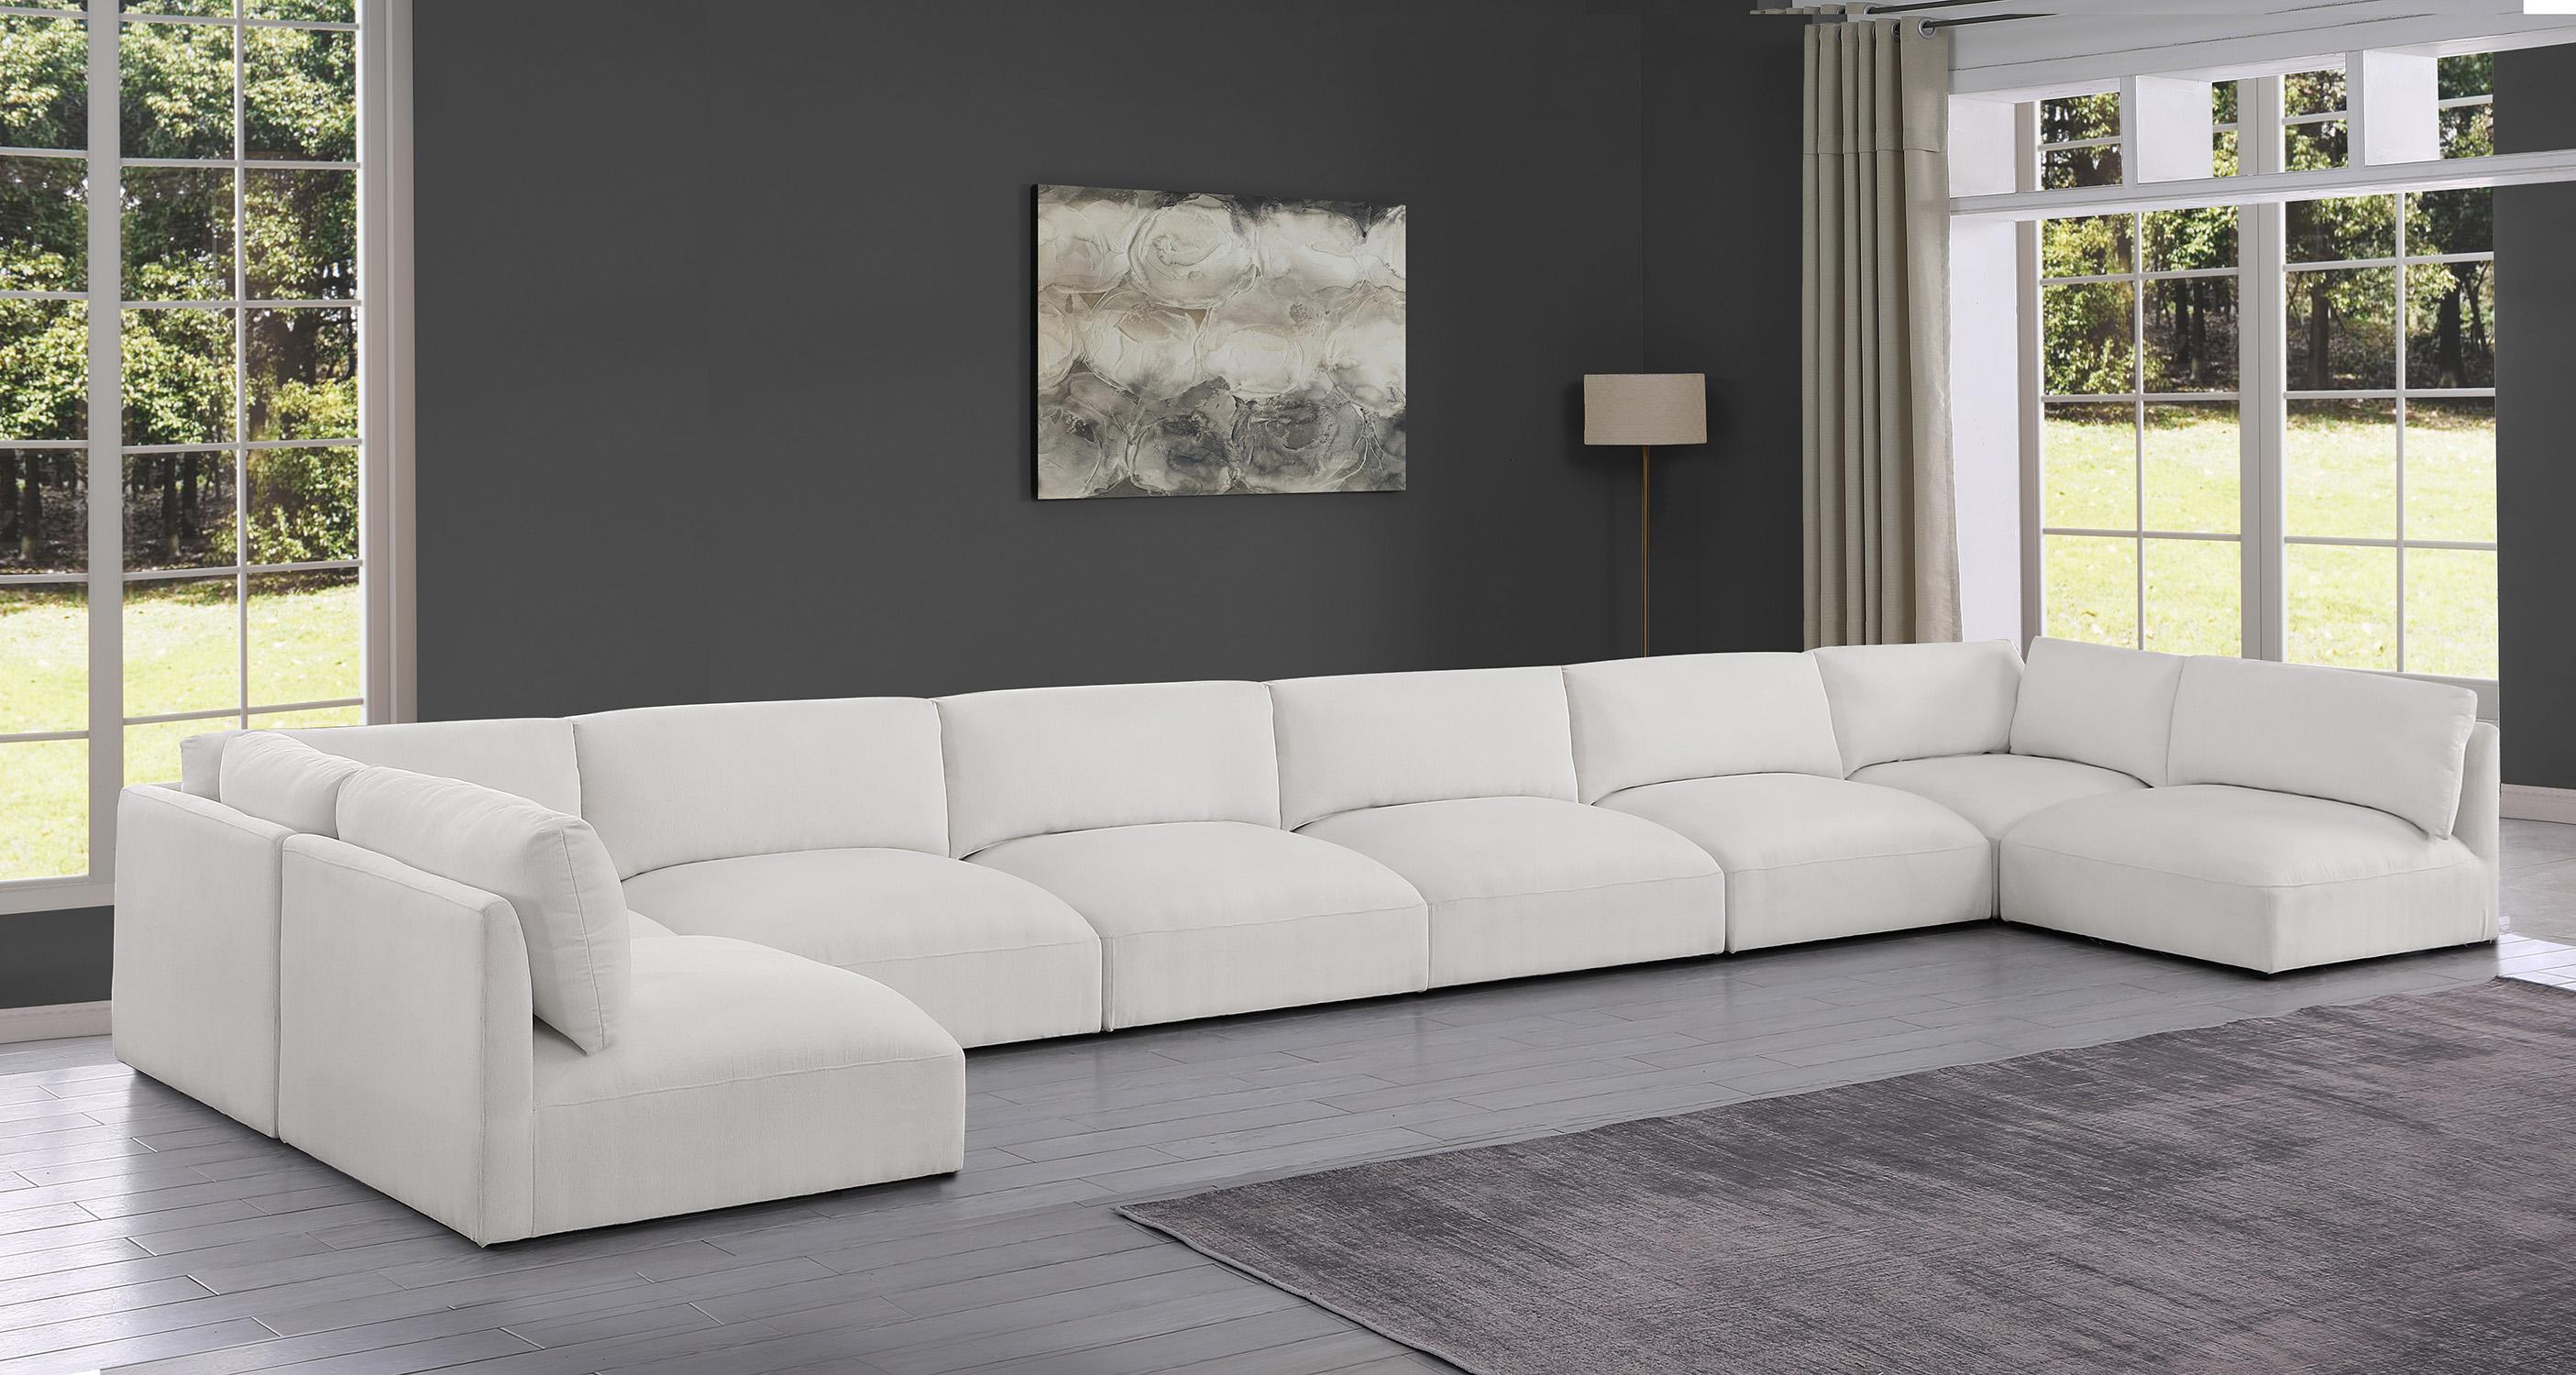 Contemporary, Modern Modular Sectional Sofa EASE 696Cream-Sec8B 696Cream-Sec8B in Cream Fabric